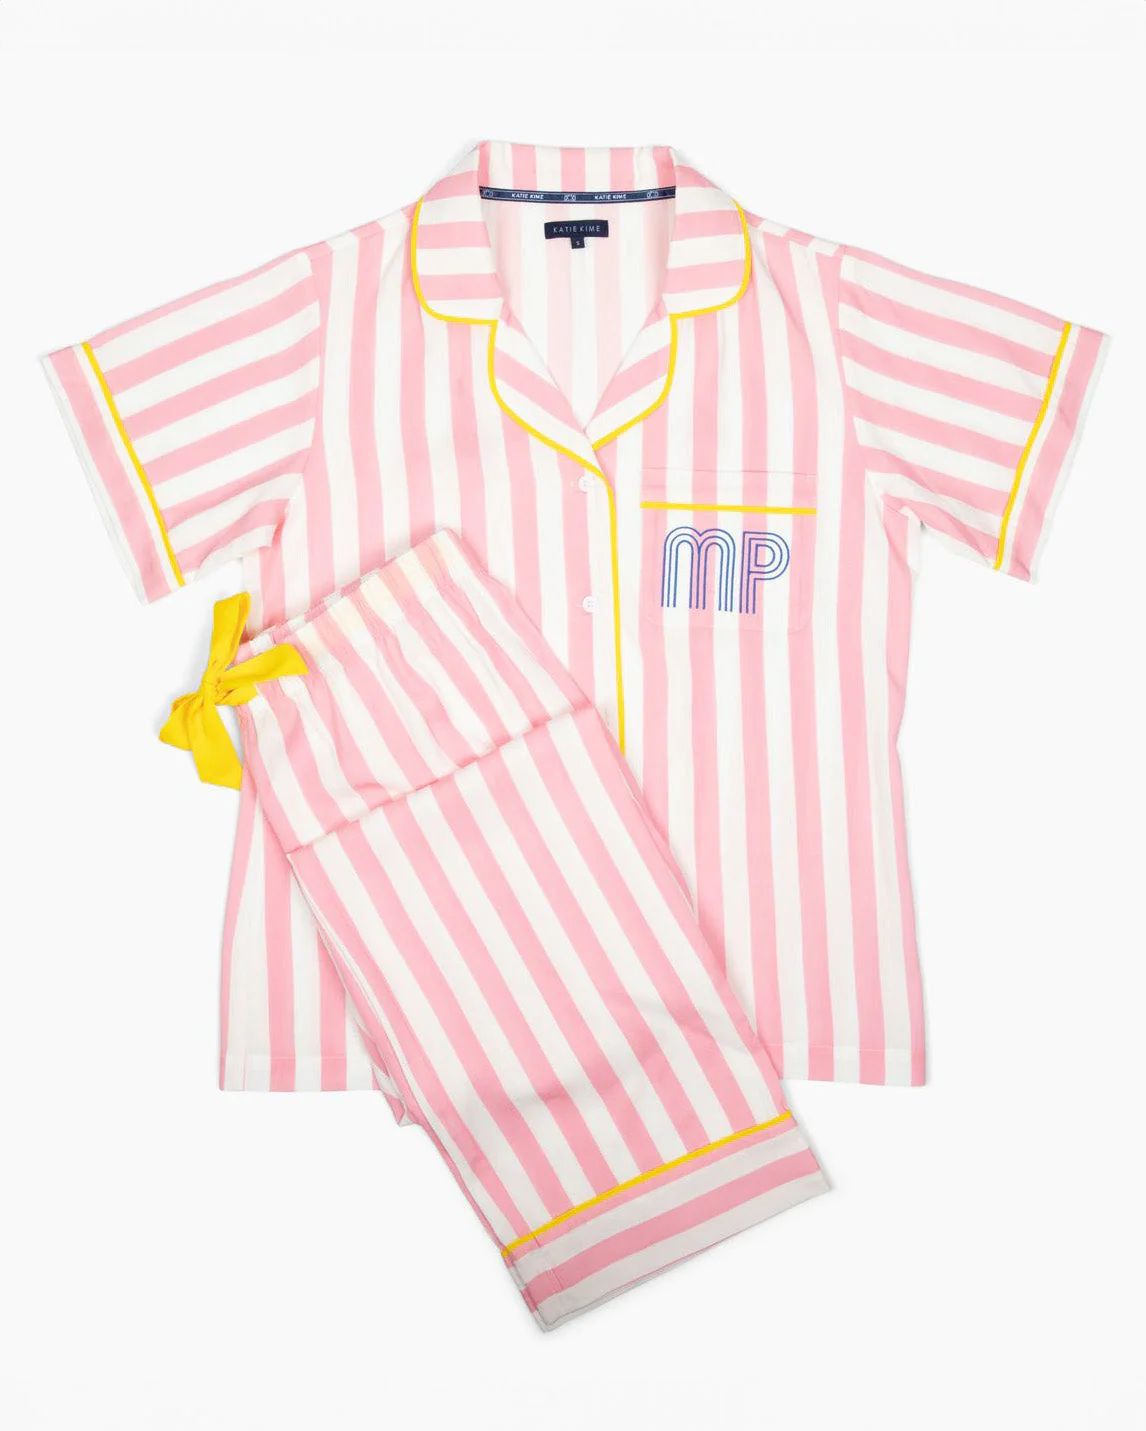 Retro Striped Pajama Pants Set | Colorful Prints, Wallpaper, Pajamas, Home Decor, & More | Katie Kime Inc